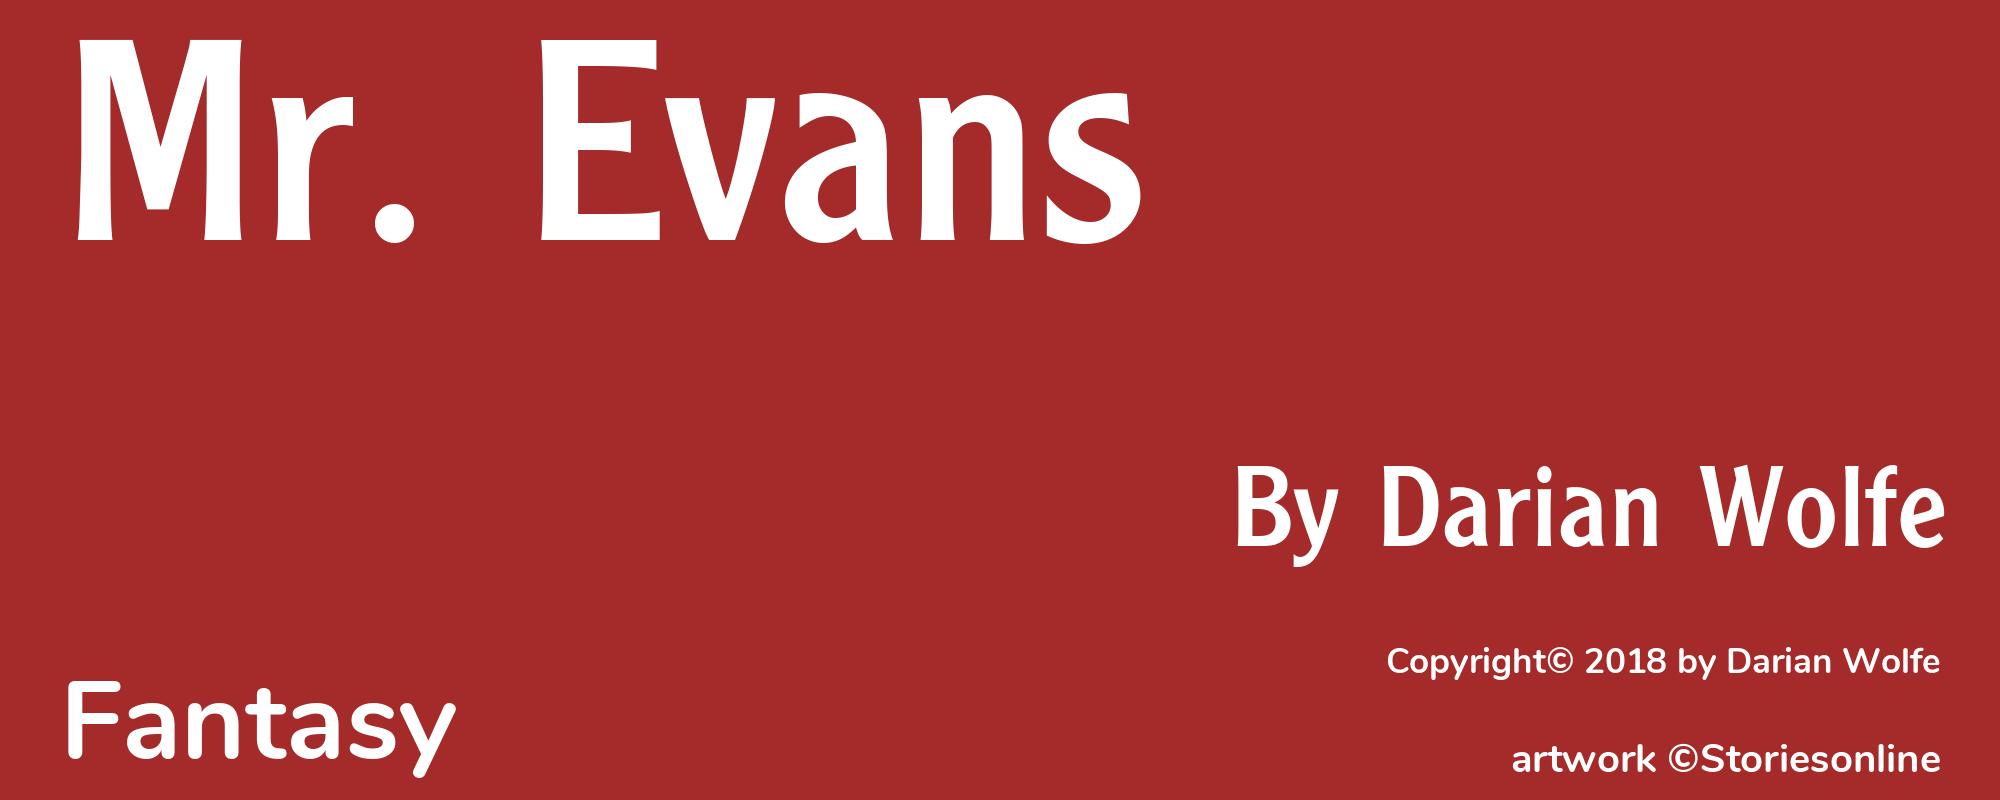 Mr. Evans - Cover